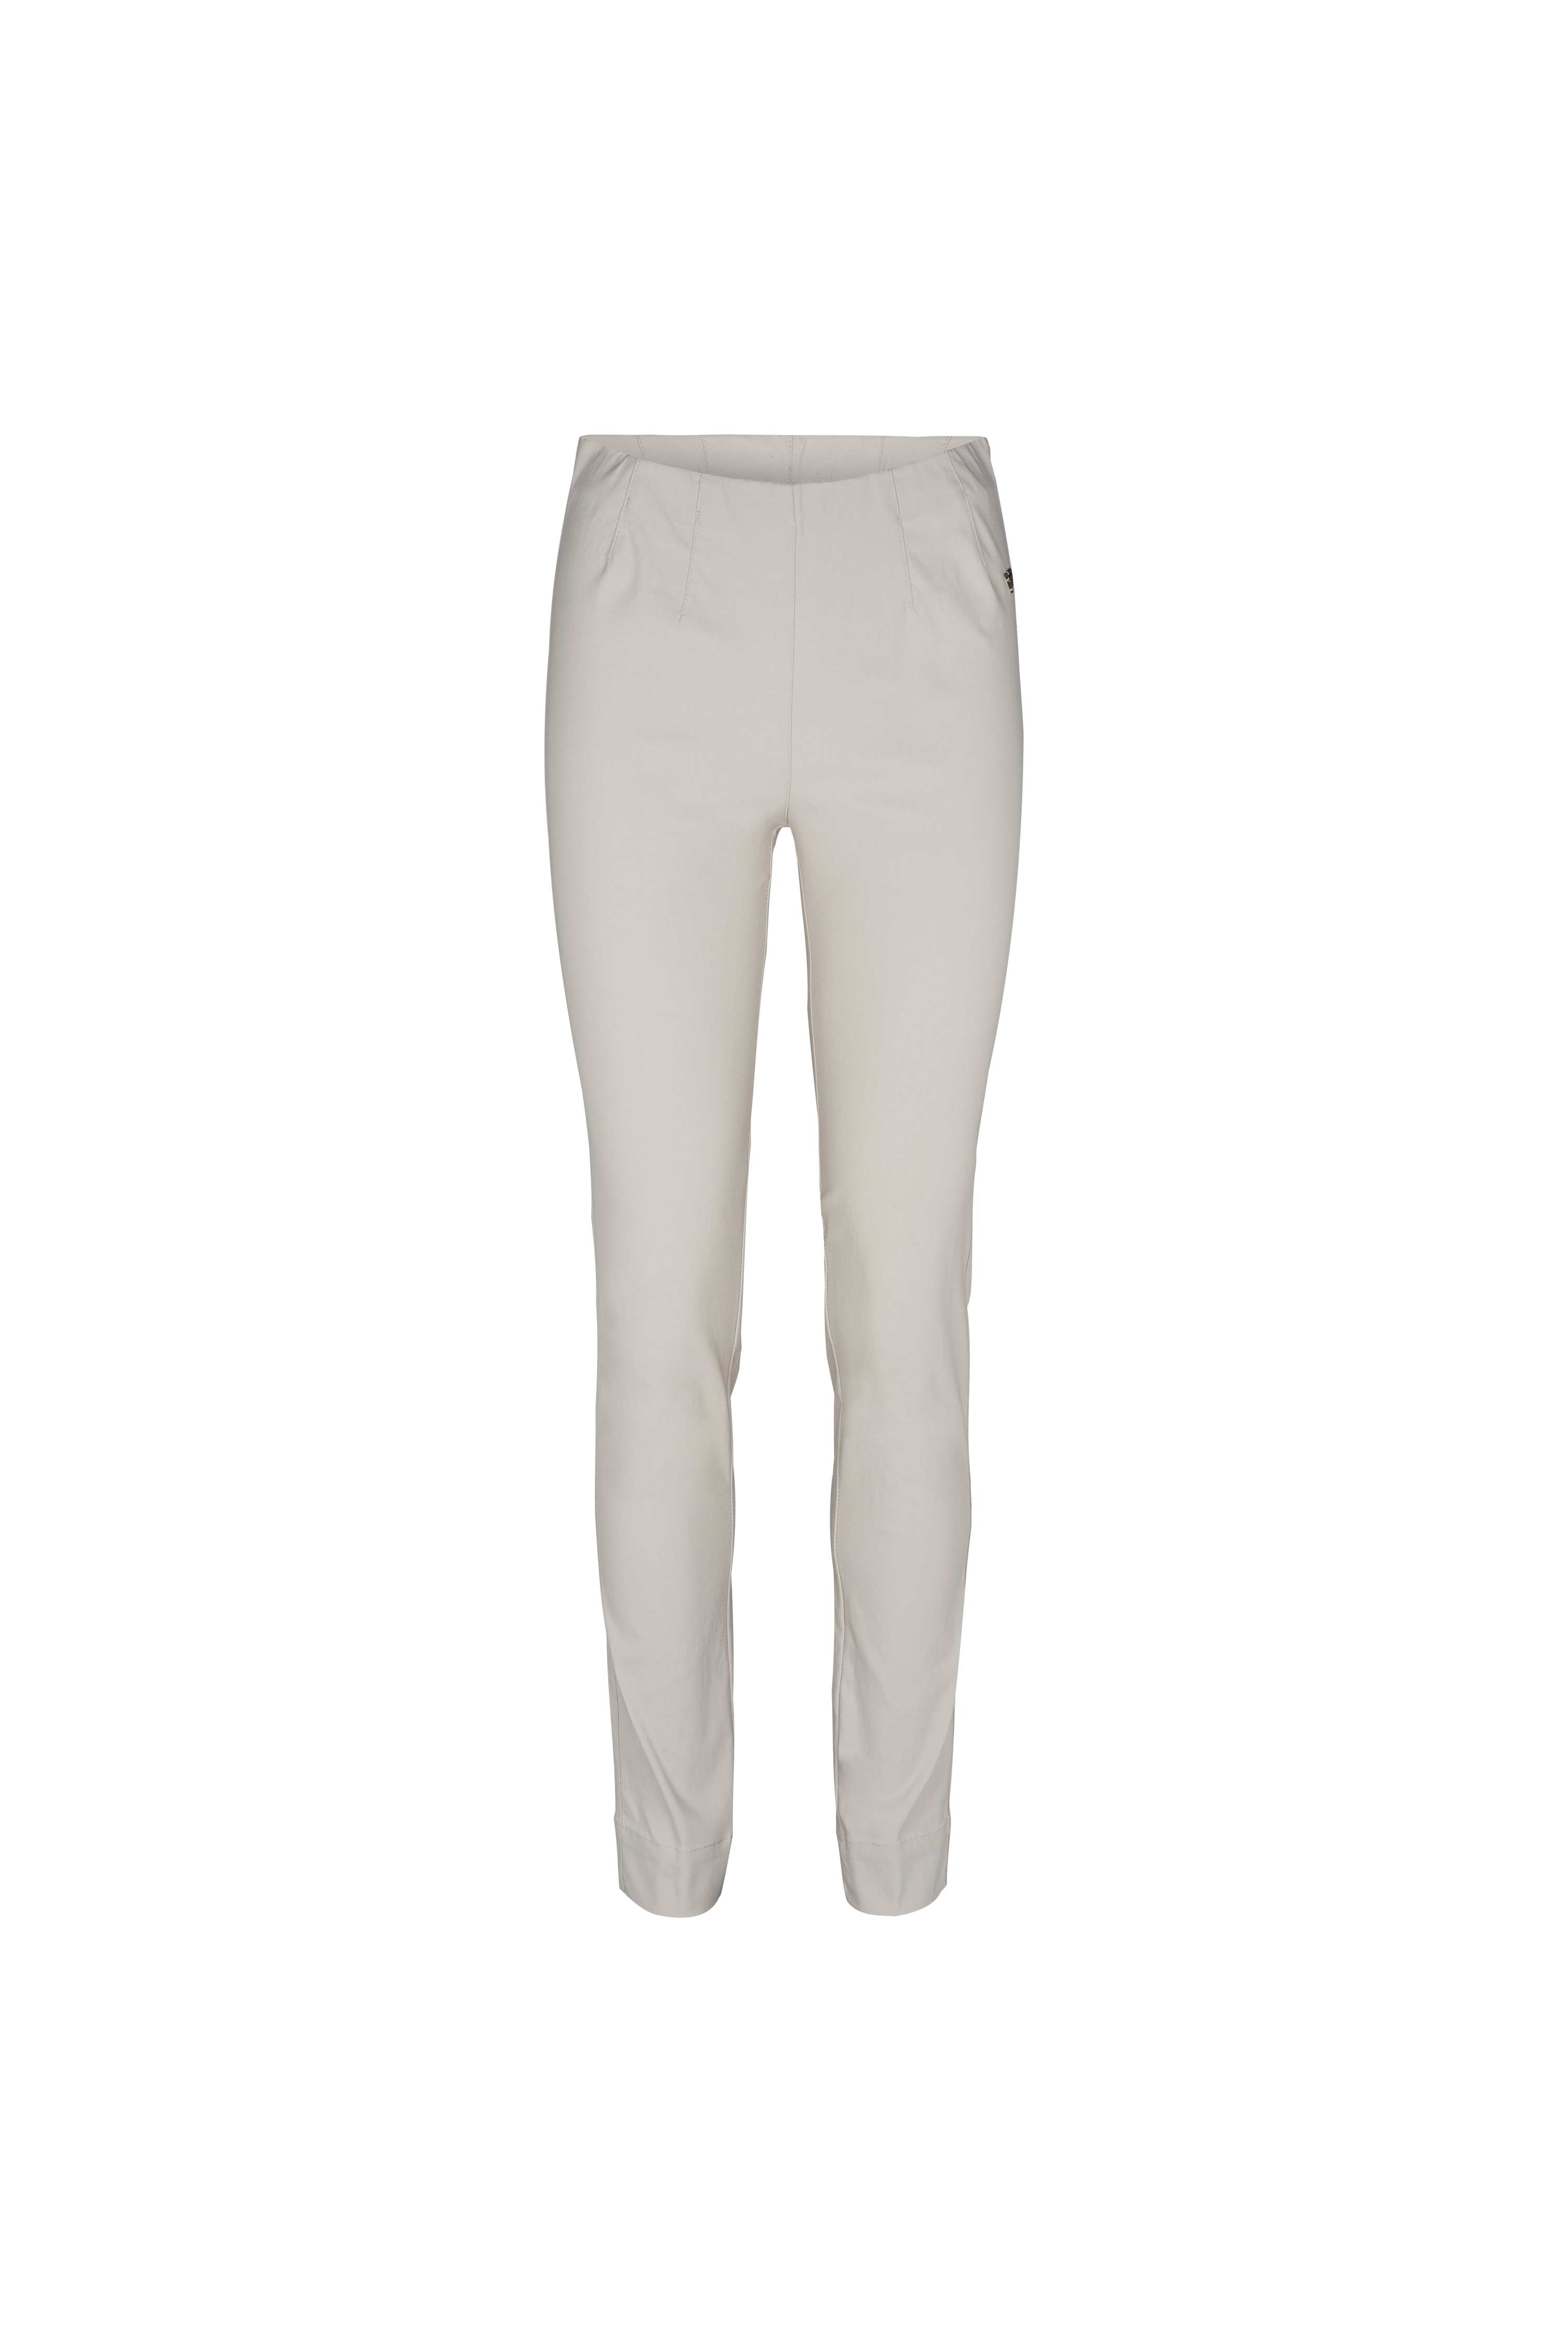 LAURIE Vicky Slim - Medium Length Trousers SLIM 25137 Grey Sand